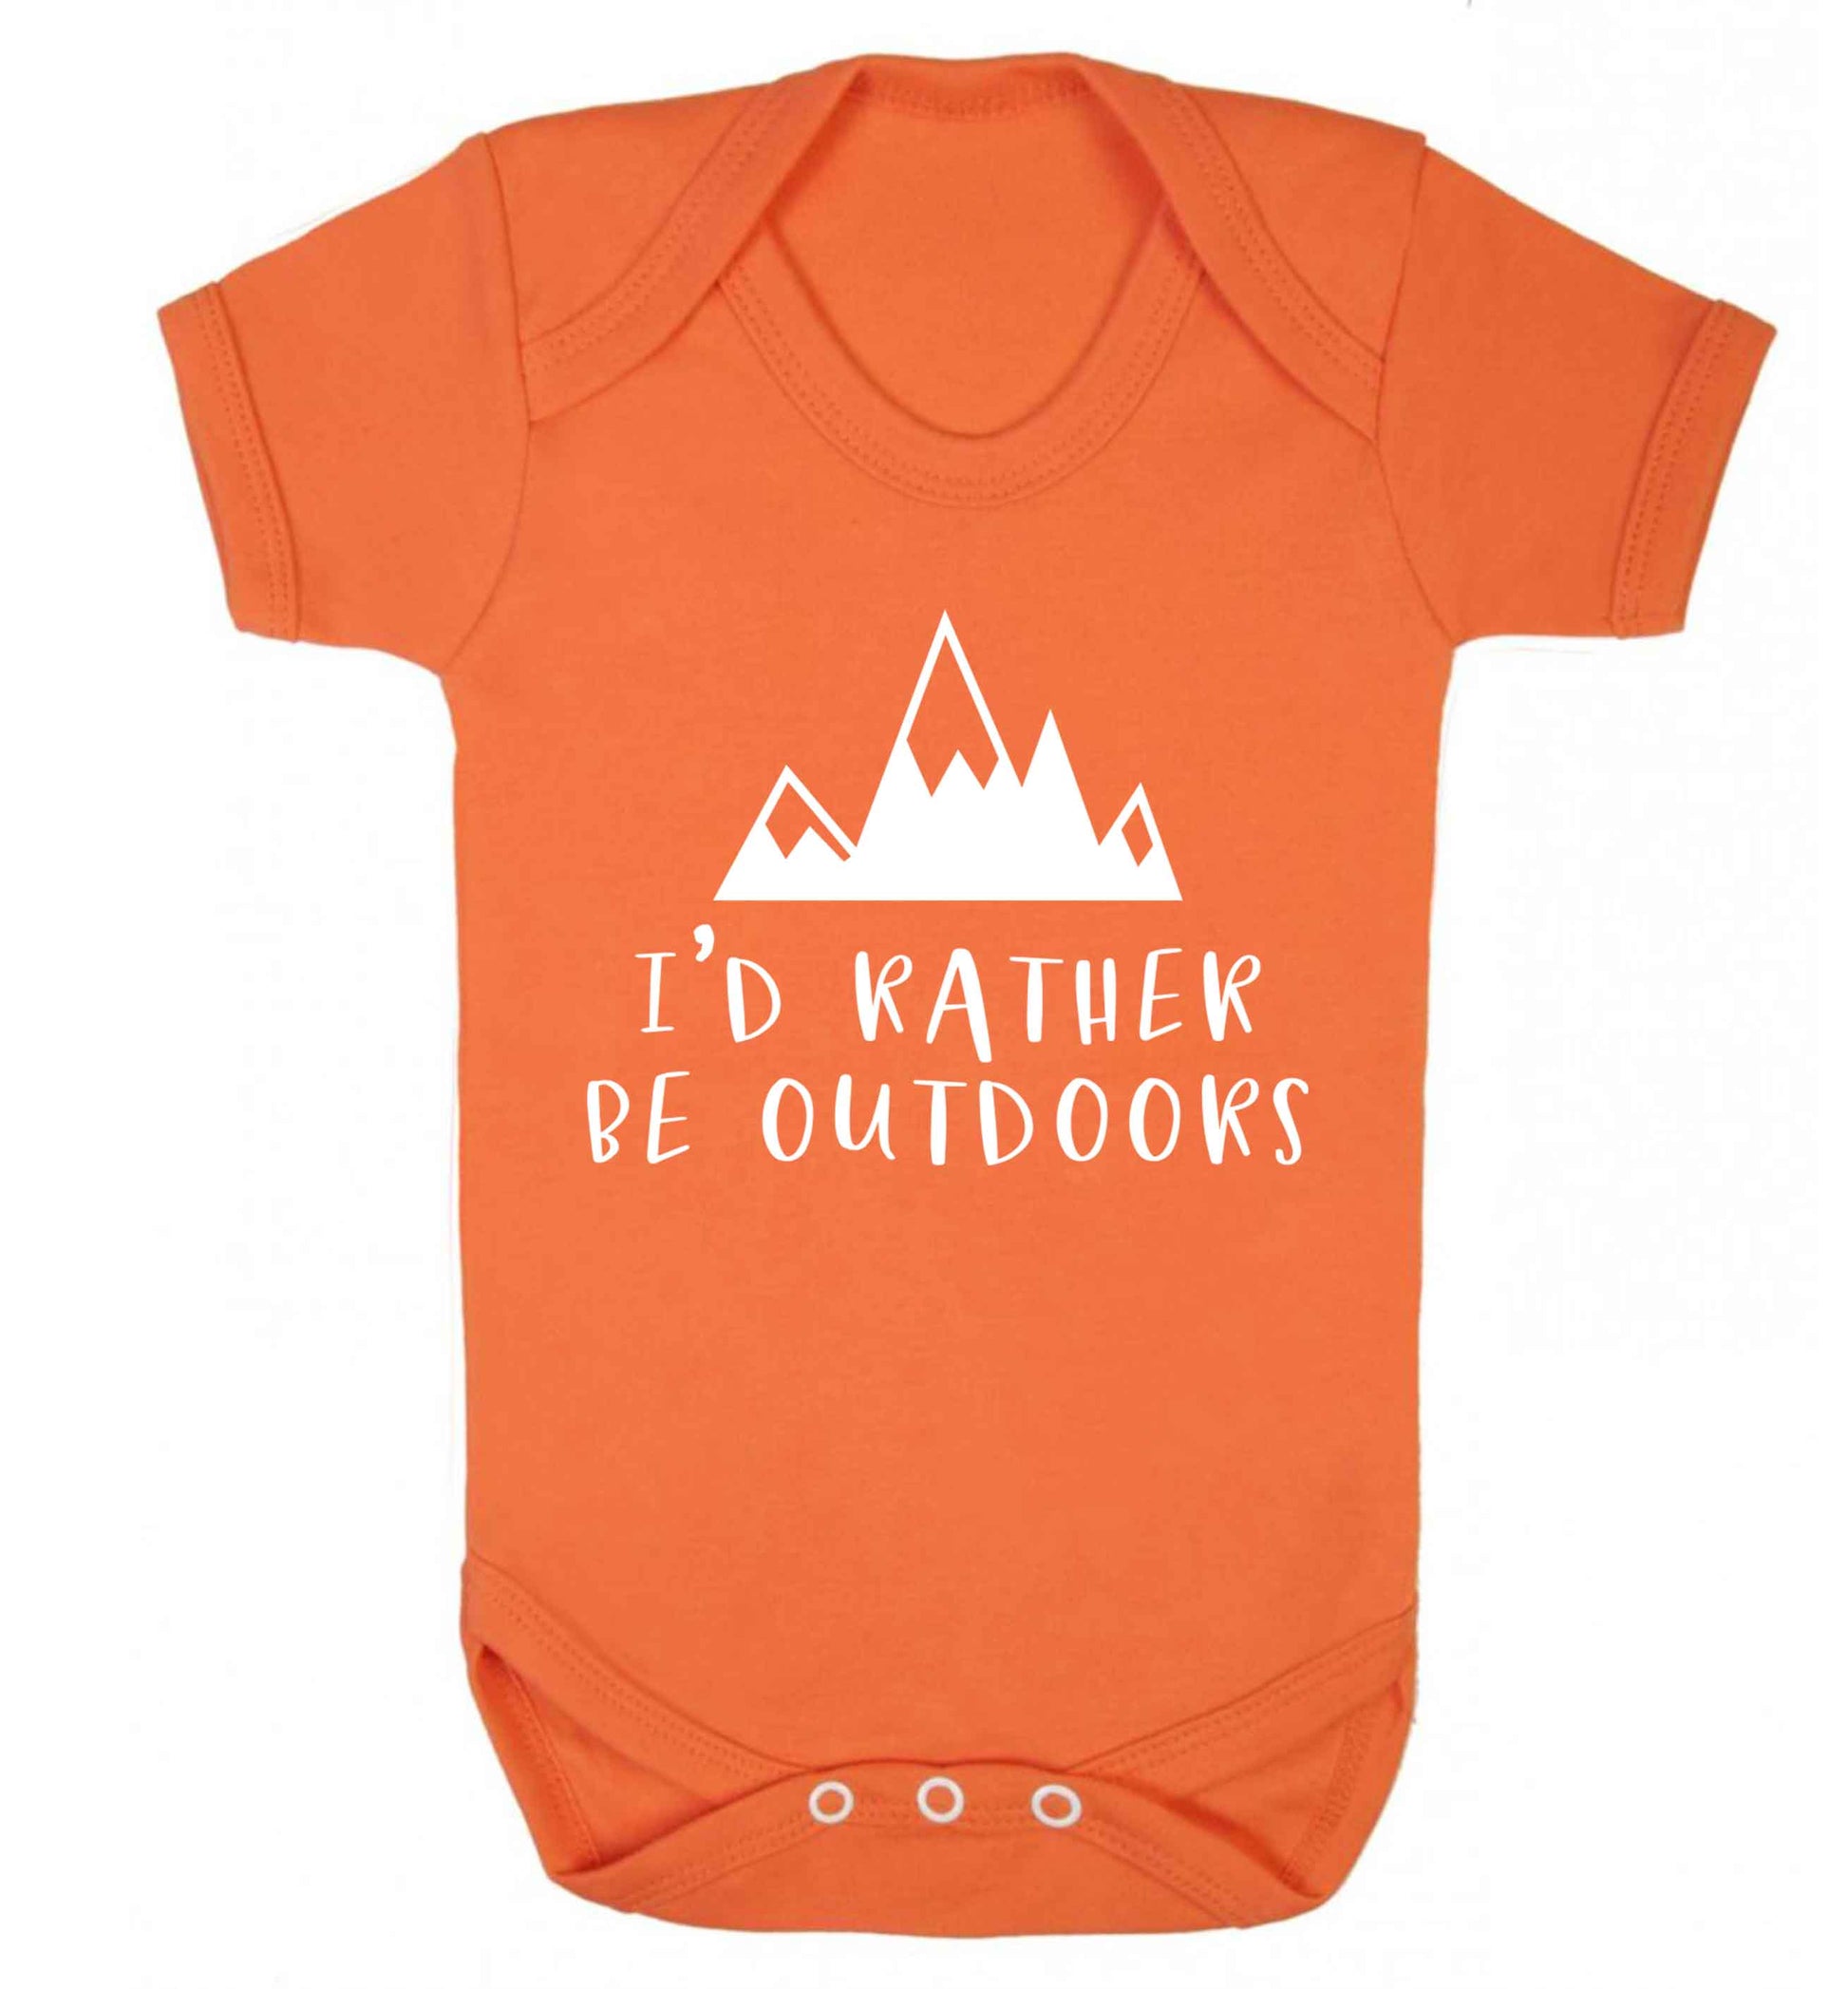 I'd rather be outdoors Baby Vest orange 18-24 months